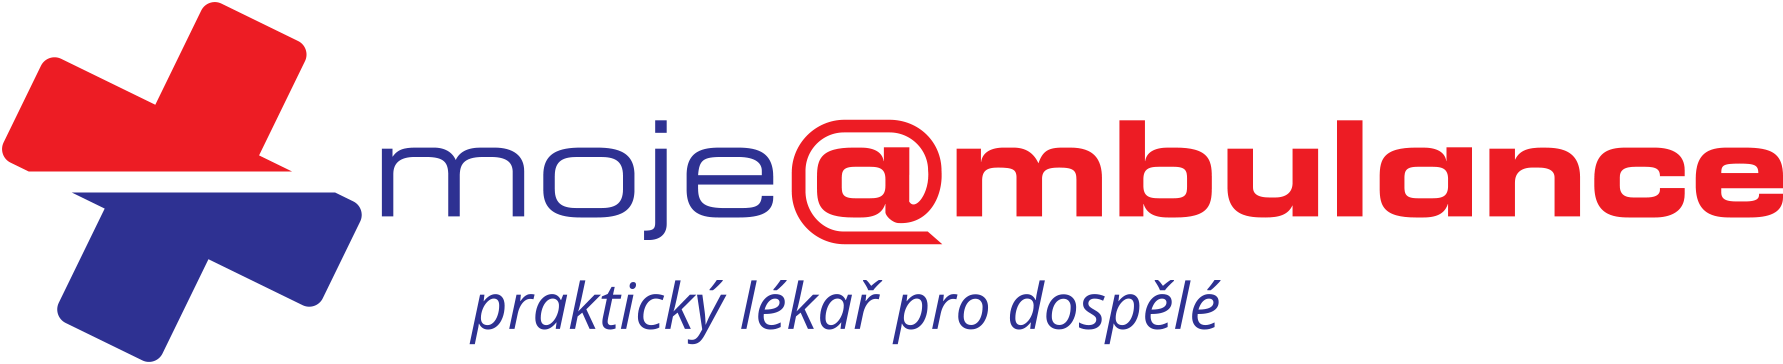 MA_logo